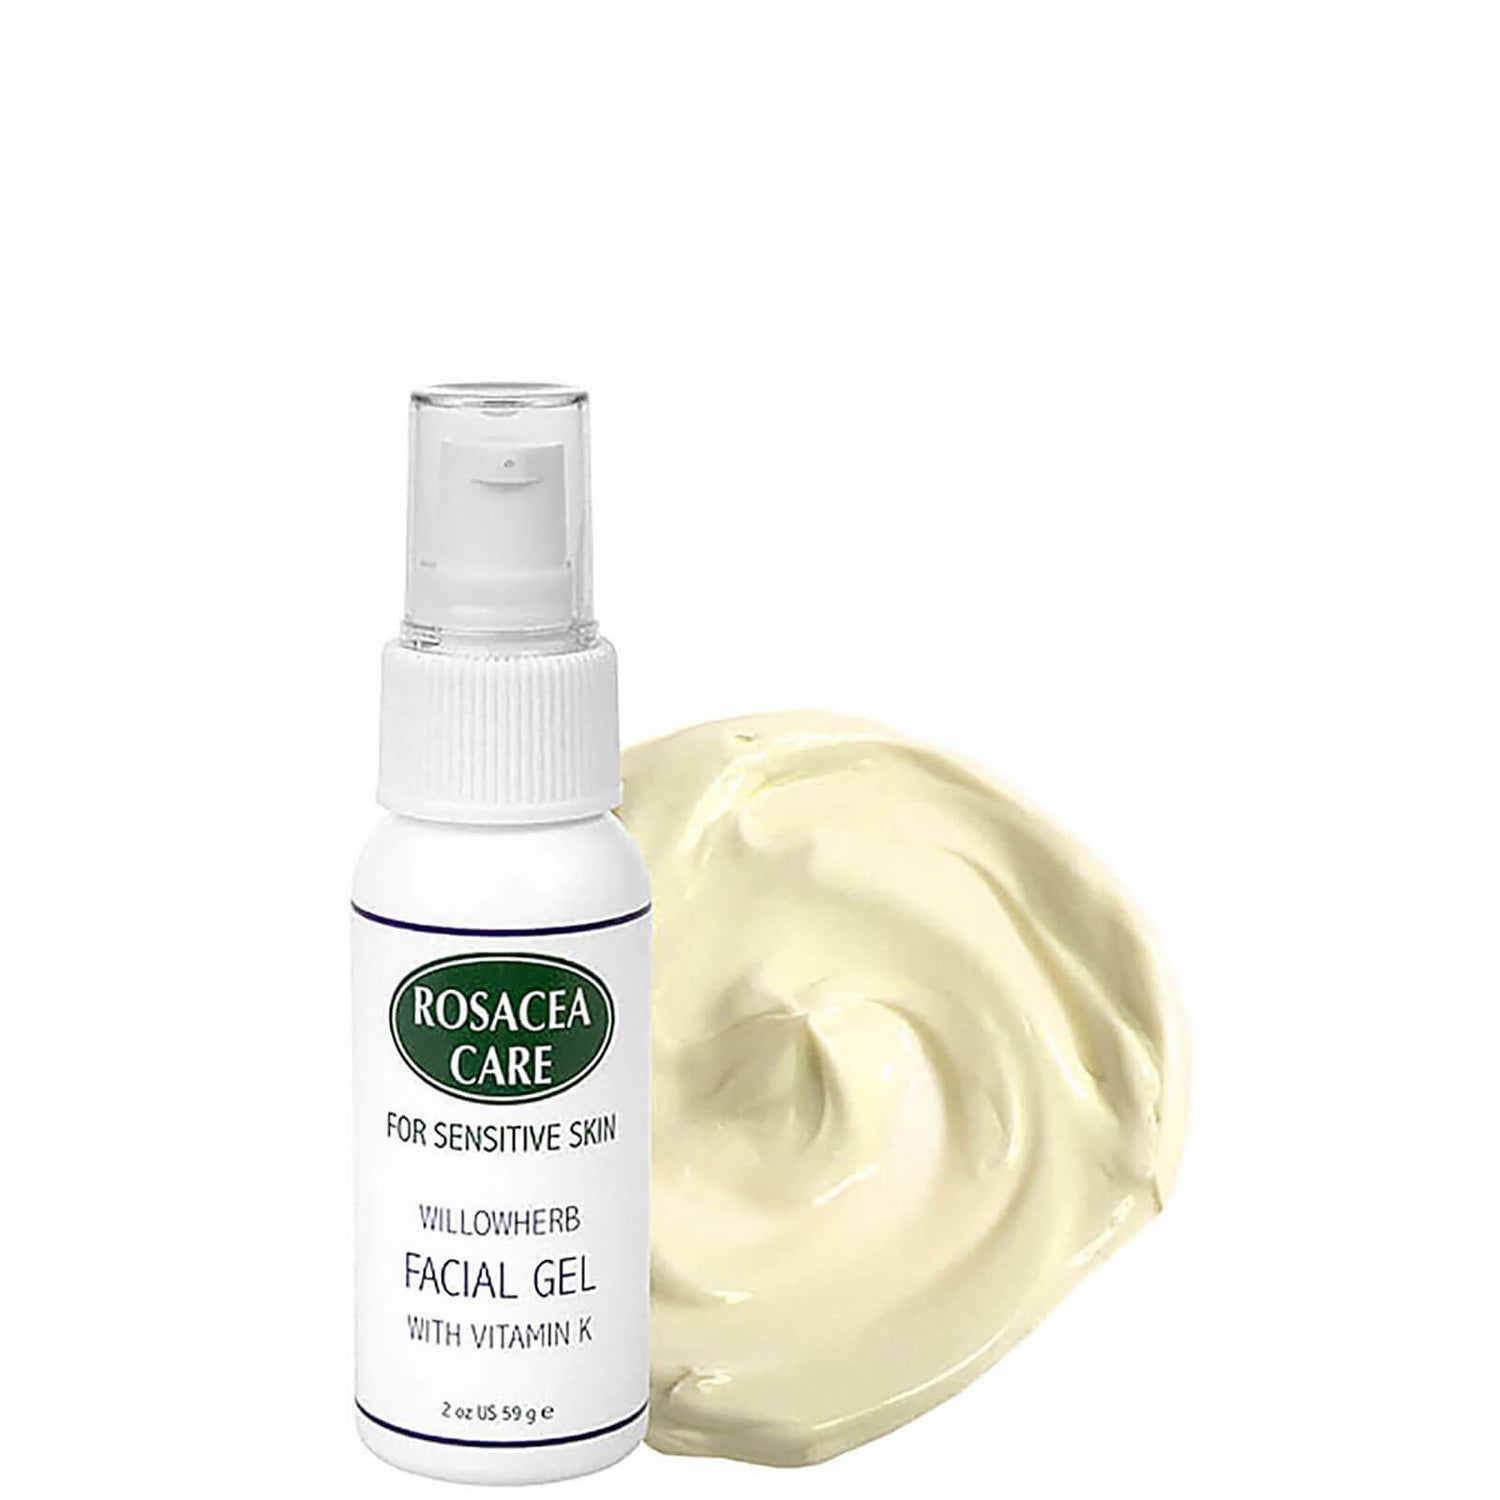 Rosacea Care Willowherb Facial Gel with Vitamin K (2 oz.)